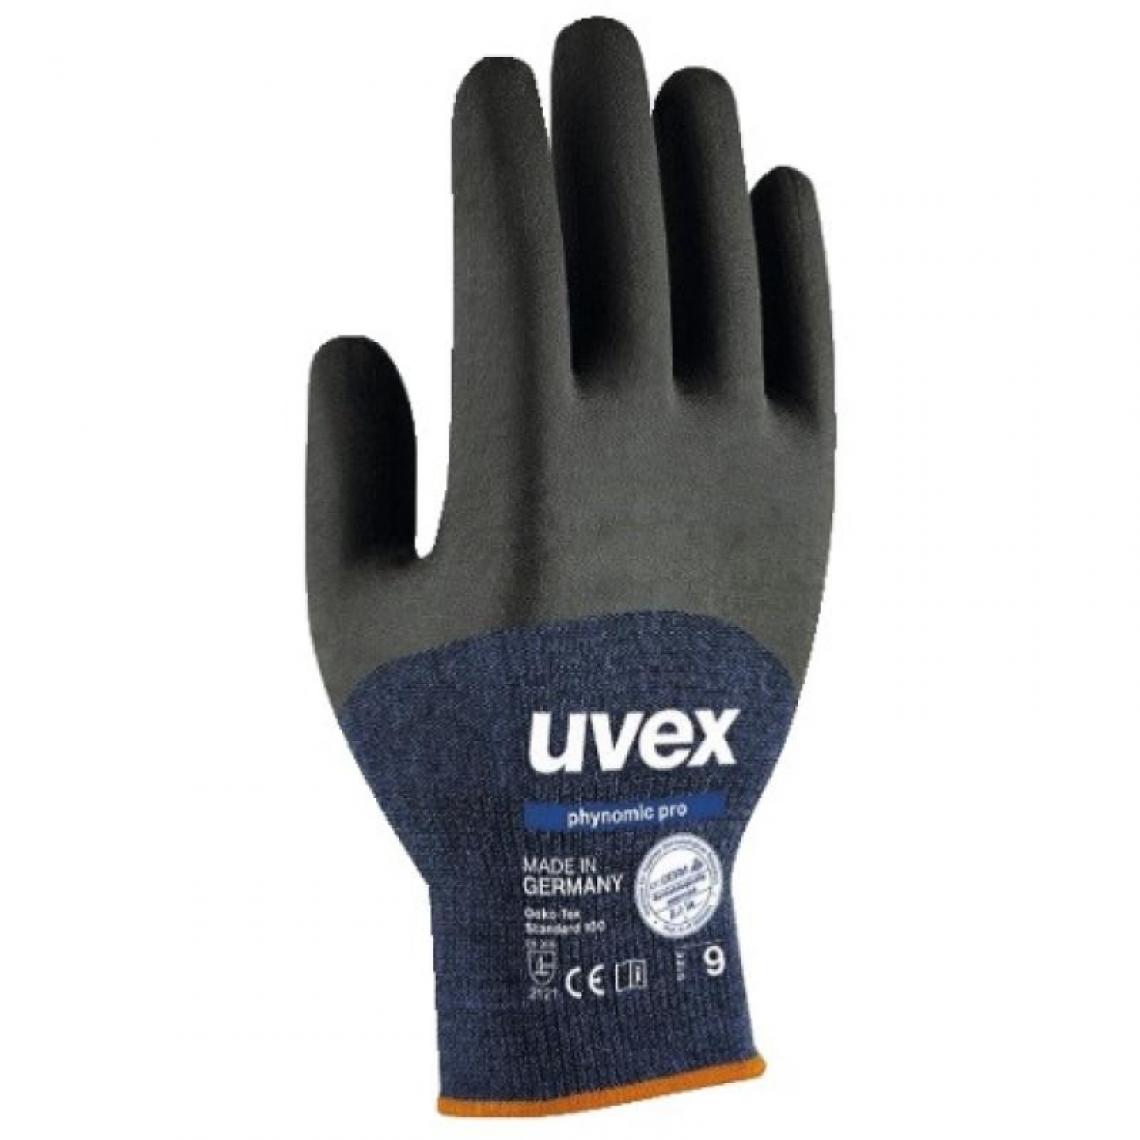 Uvex - Gants phynomic pro T8 (bt10) - Protections pieds et mains